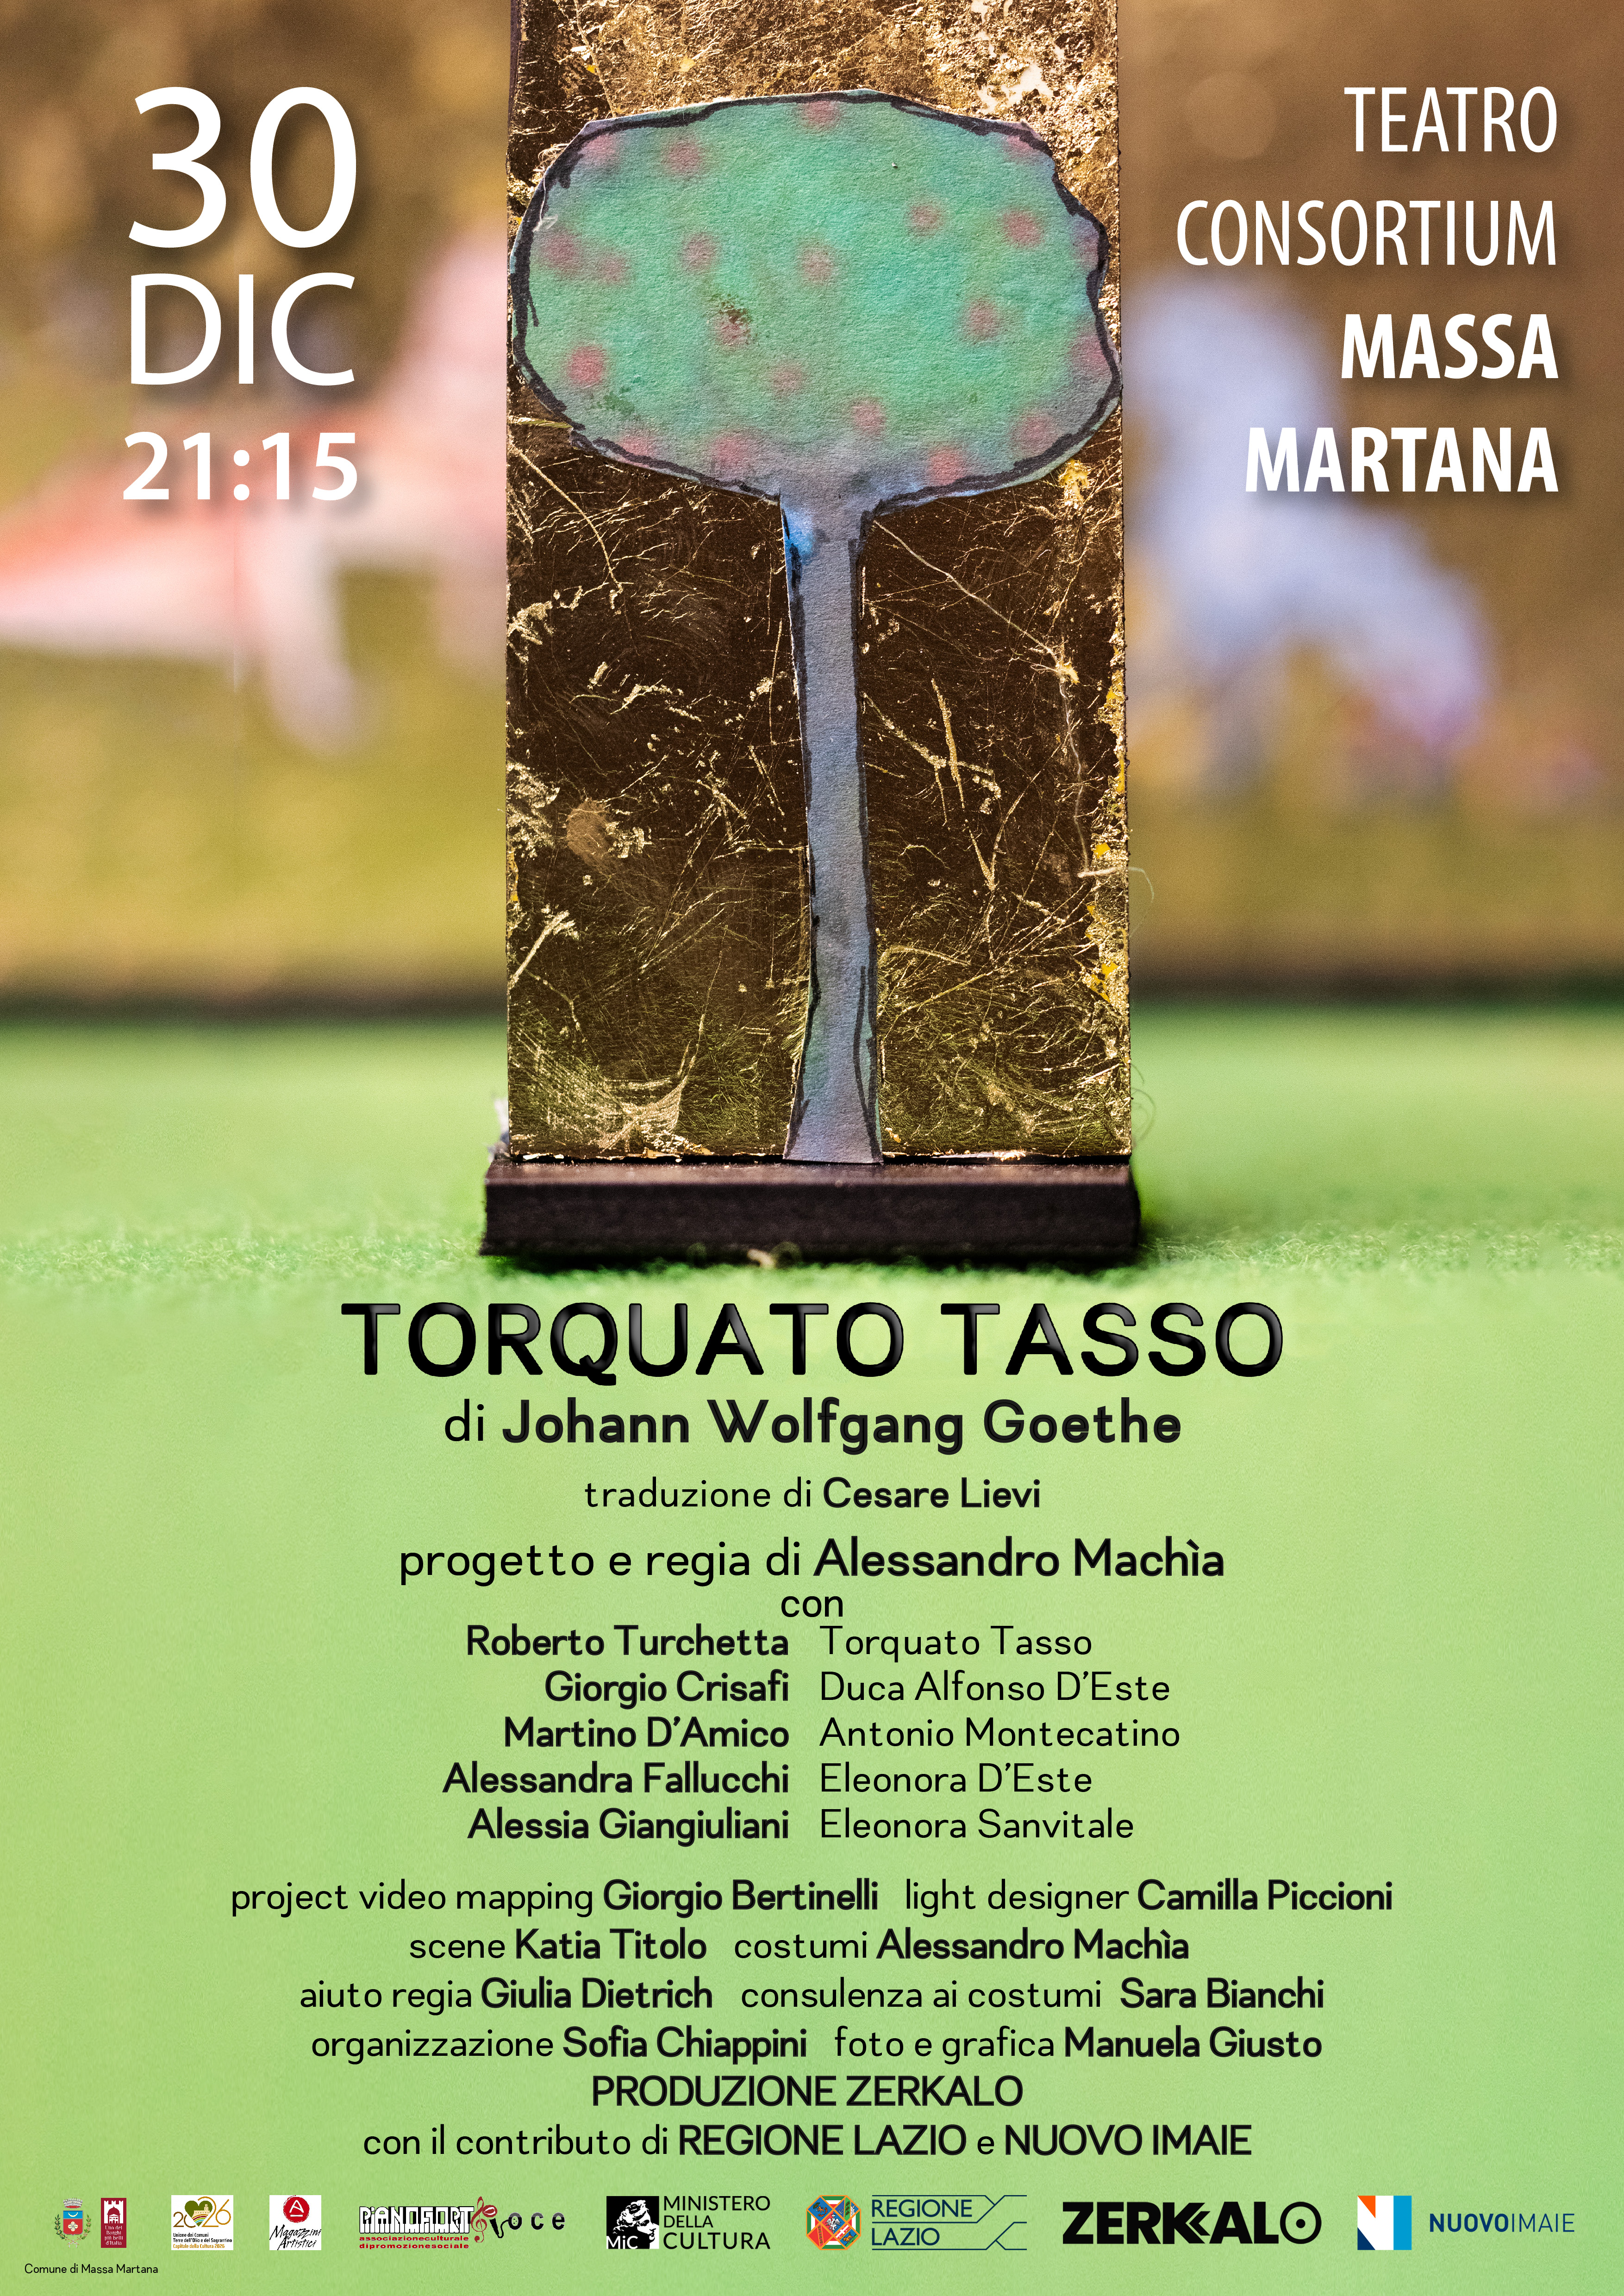 Massa Martana – Al Teatro Consortium il “Torquato Tasso” di Johann Wolfgang Goethe